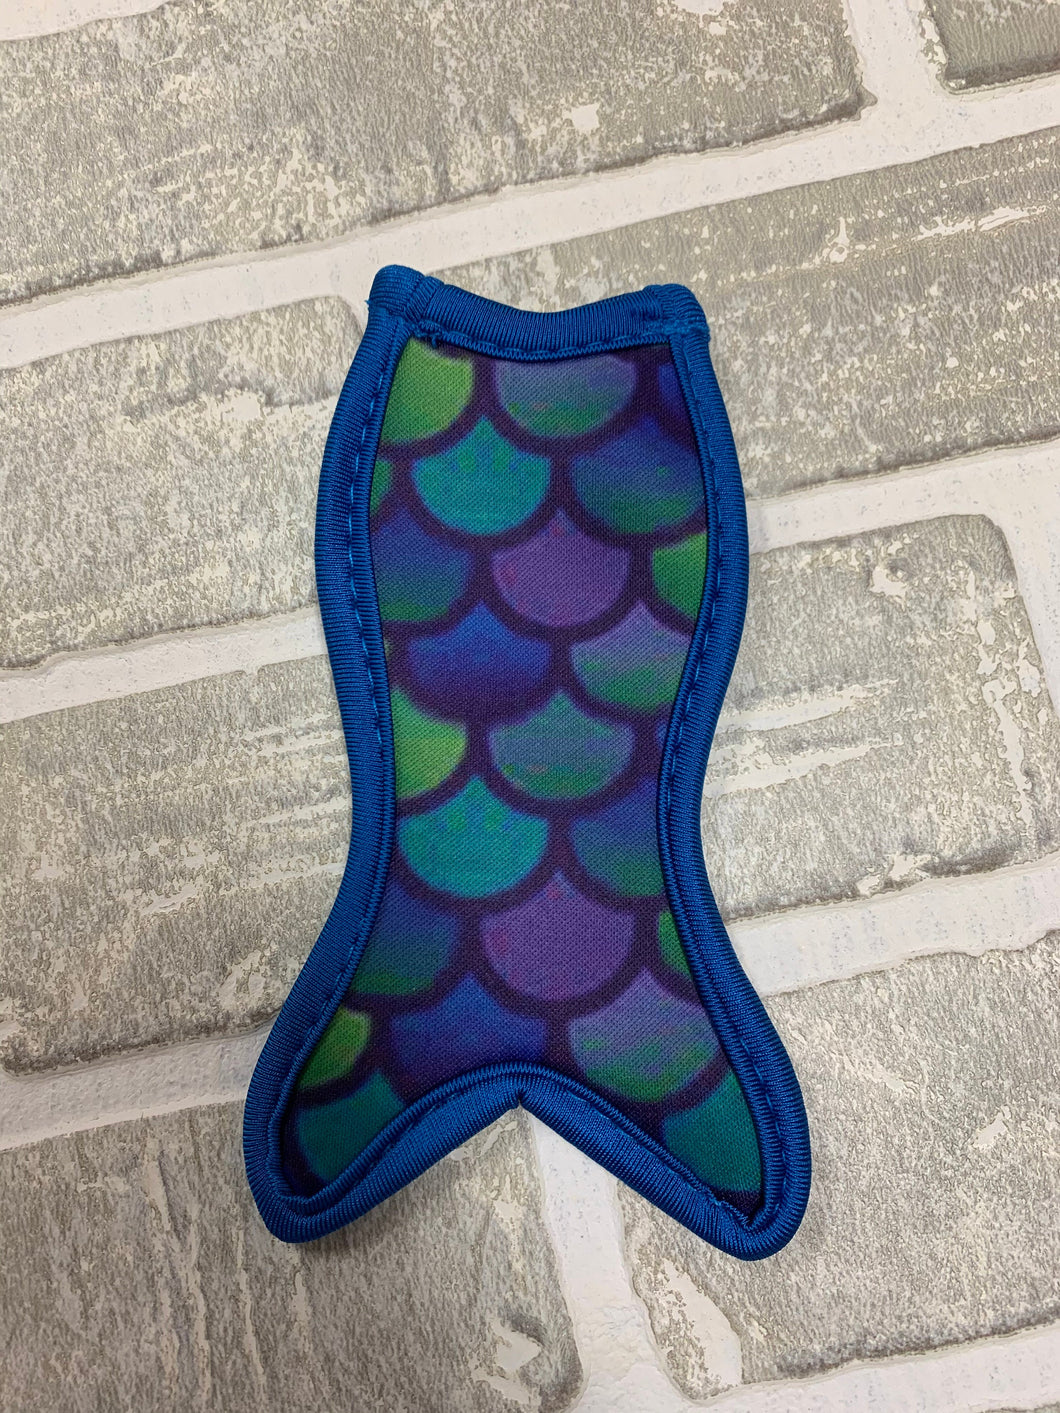 Blue, purple & green mermaid tail blanks